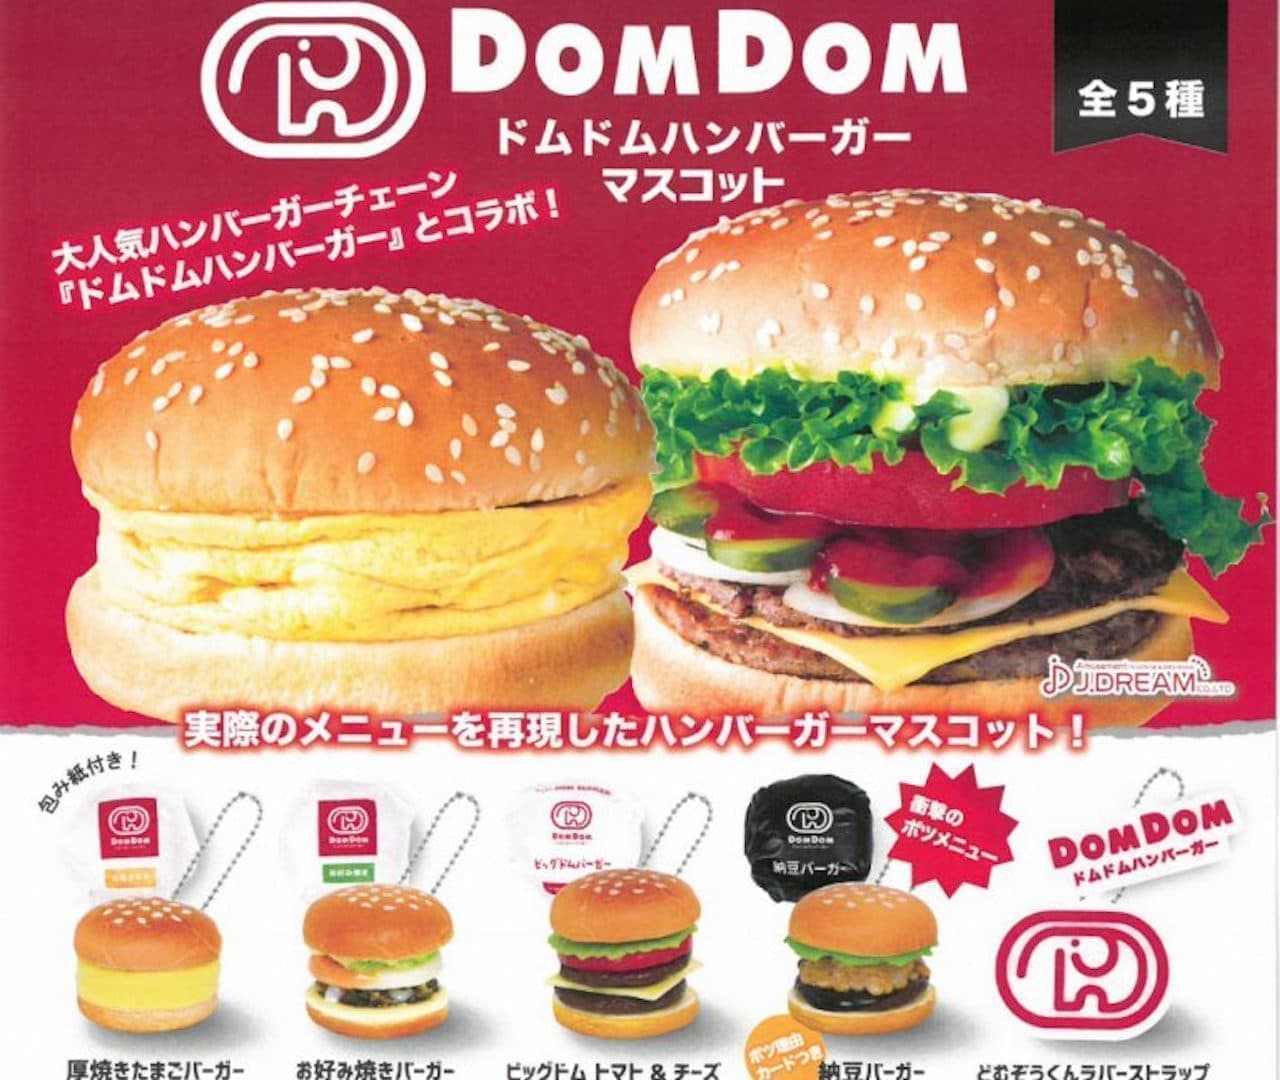 "Dom Dom Hamburger Mascot" capsule toy